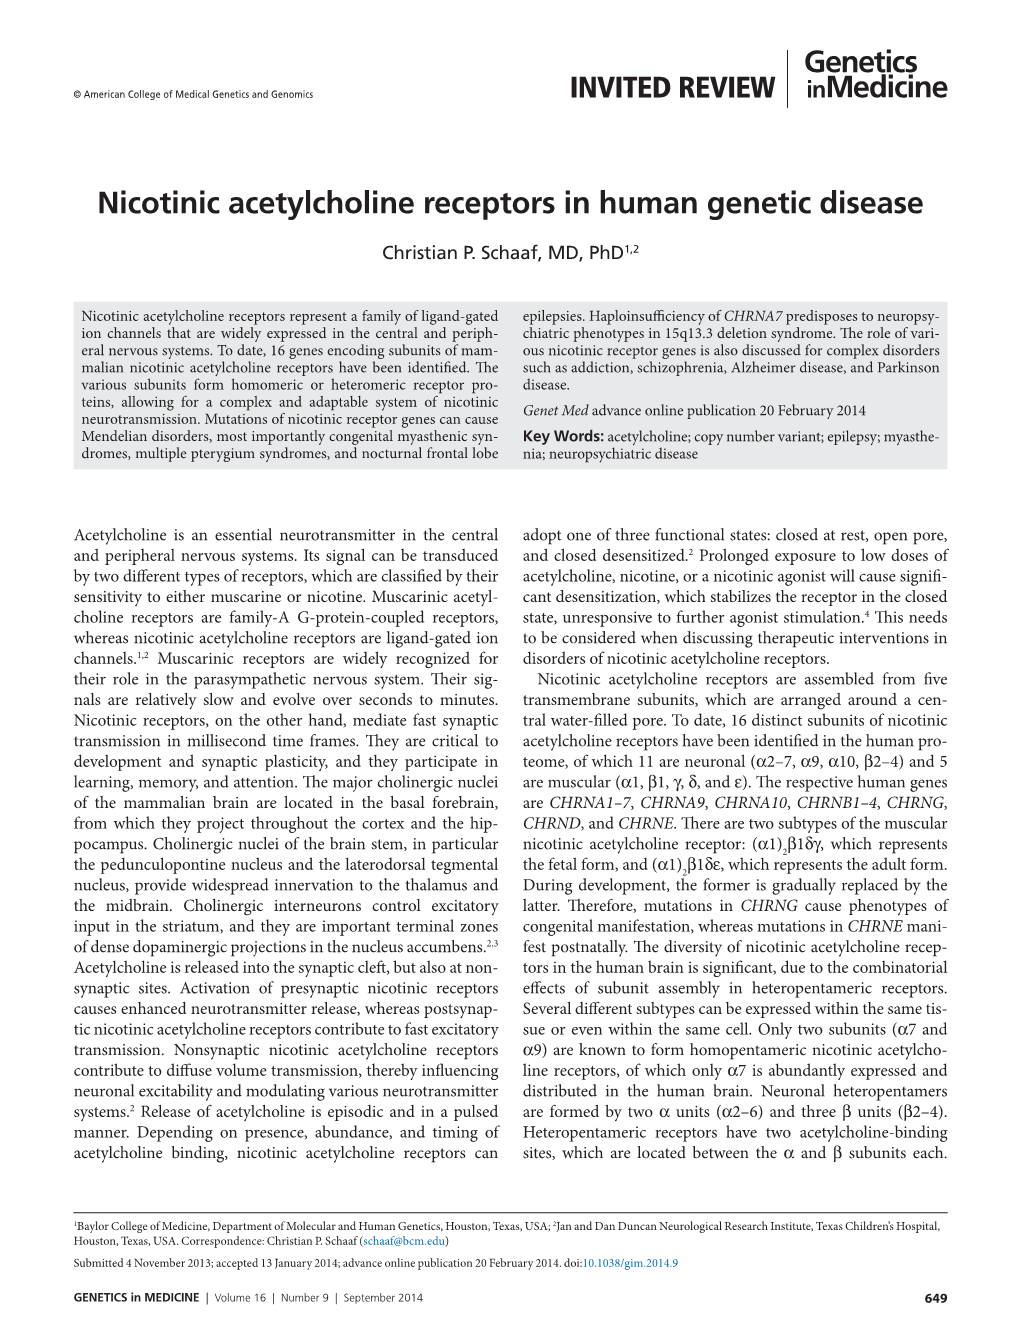 Nicotinic Acetylcholine Receptors in Human Genetic Disease